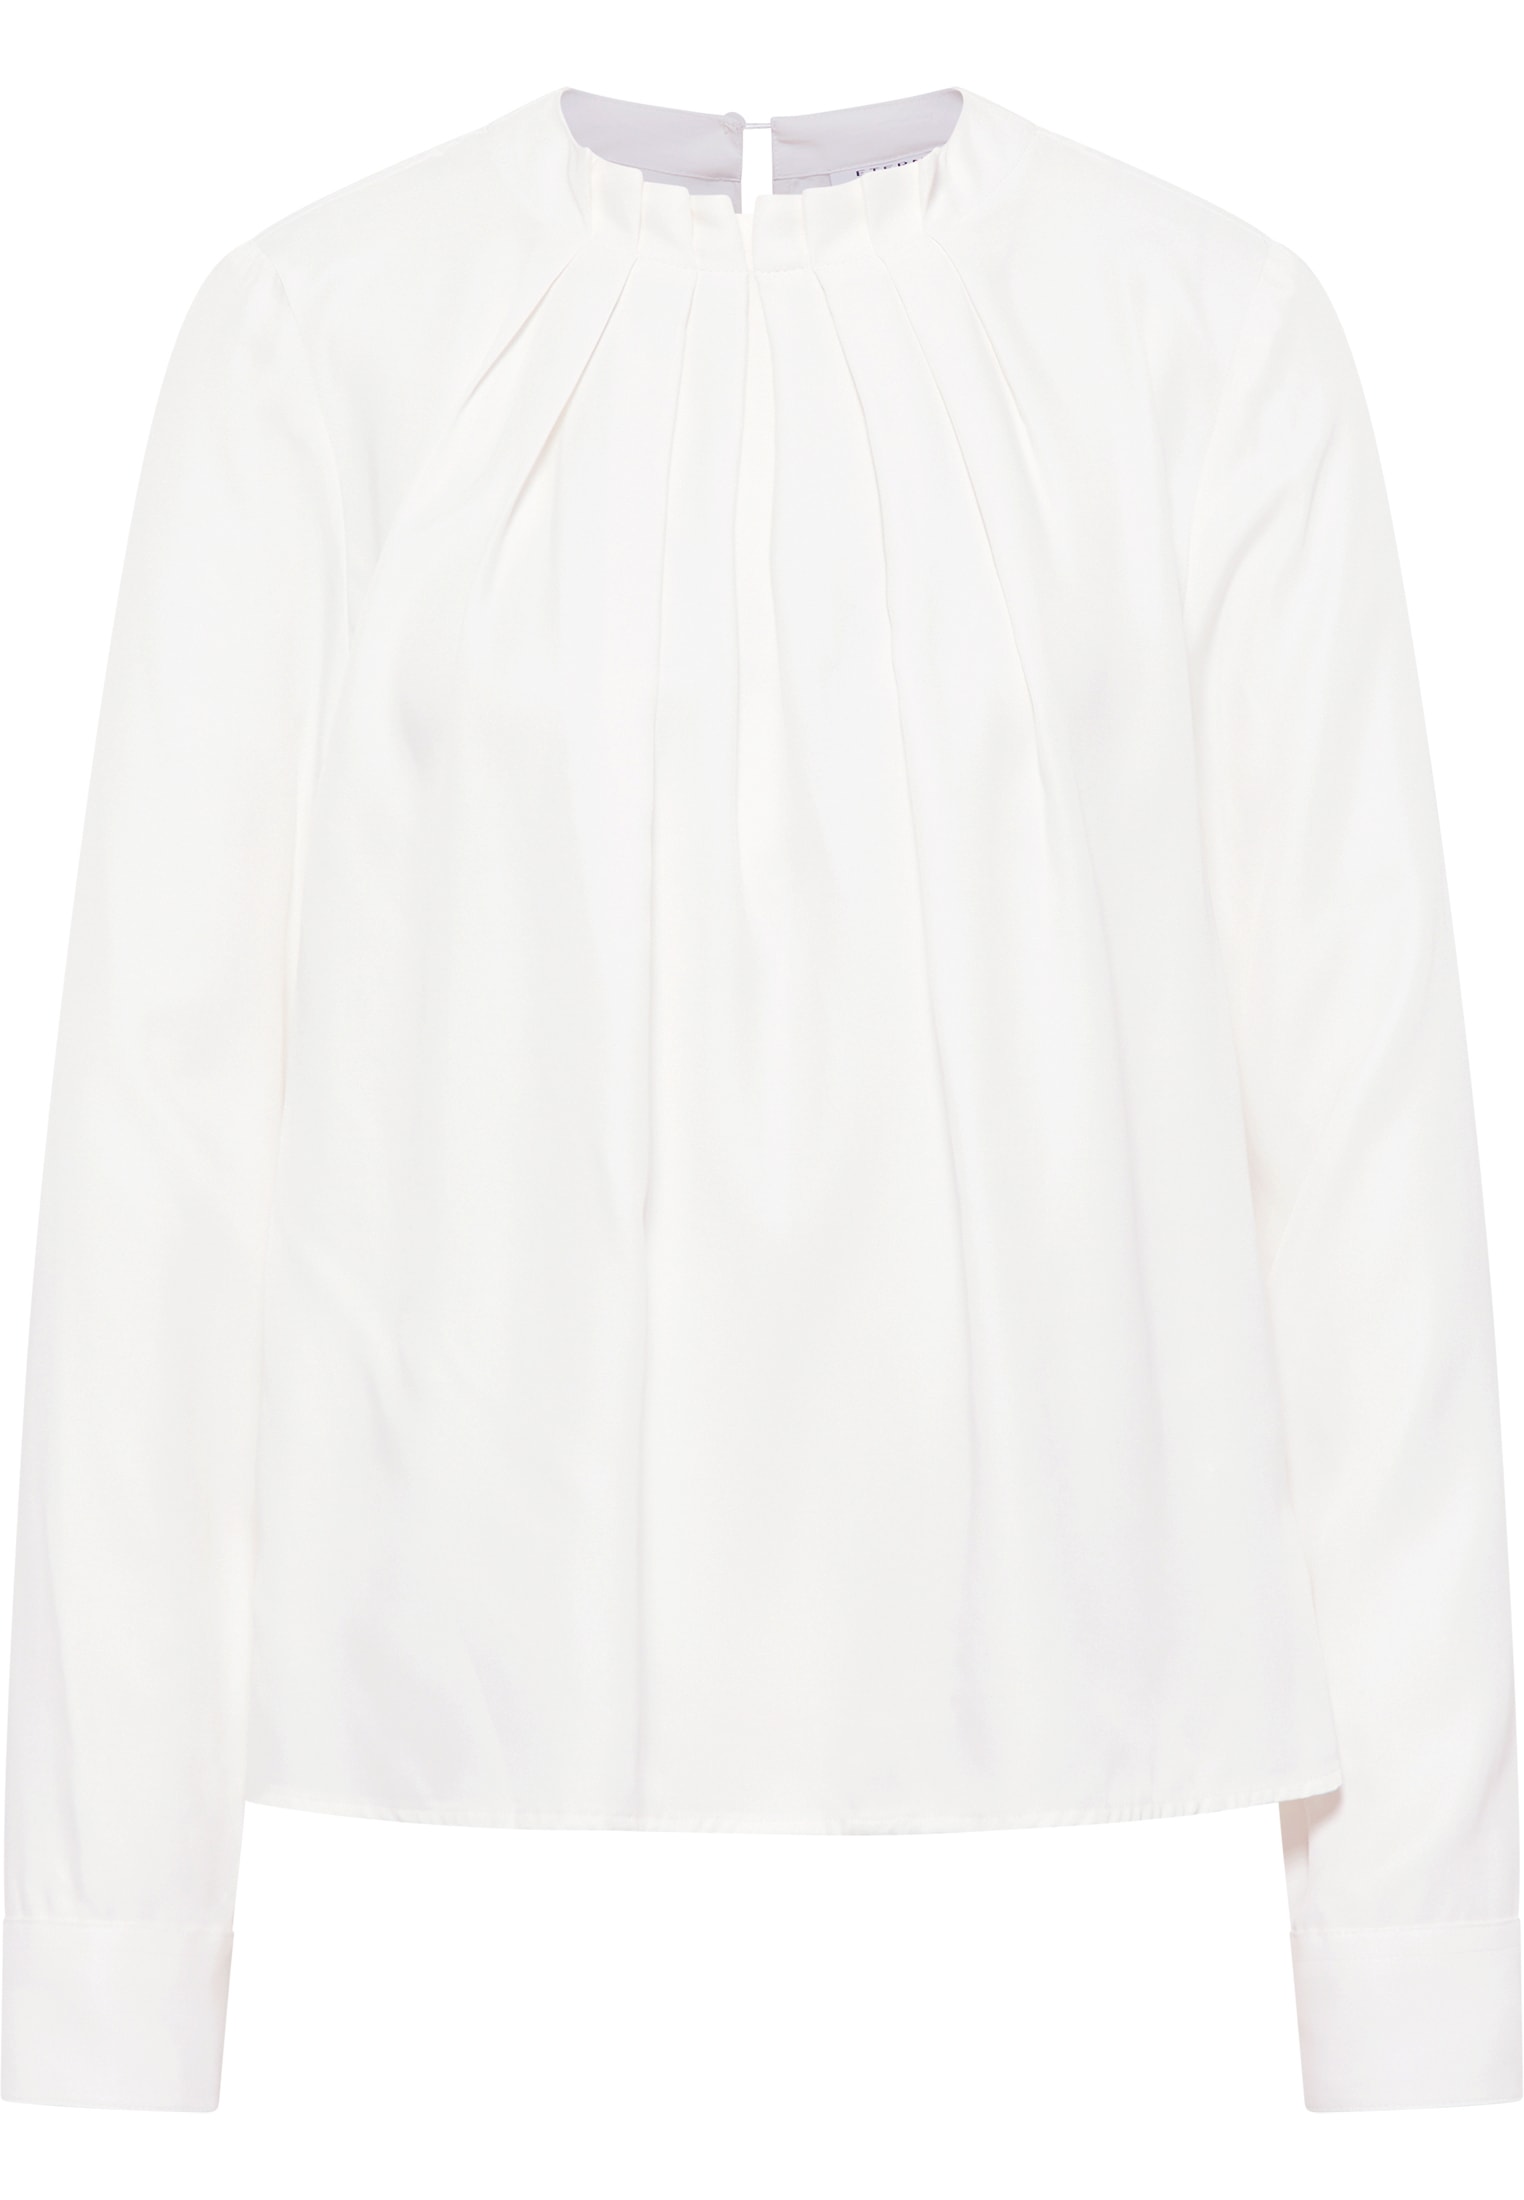 Viscose 40 in Bluse Shirt unifarben | off-white | | Langarm 2BL04240-00-02-40-1/1 | off-white